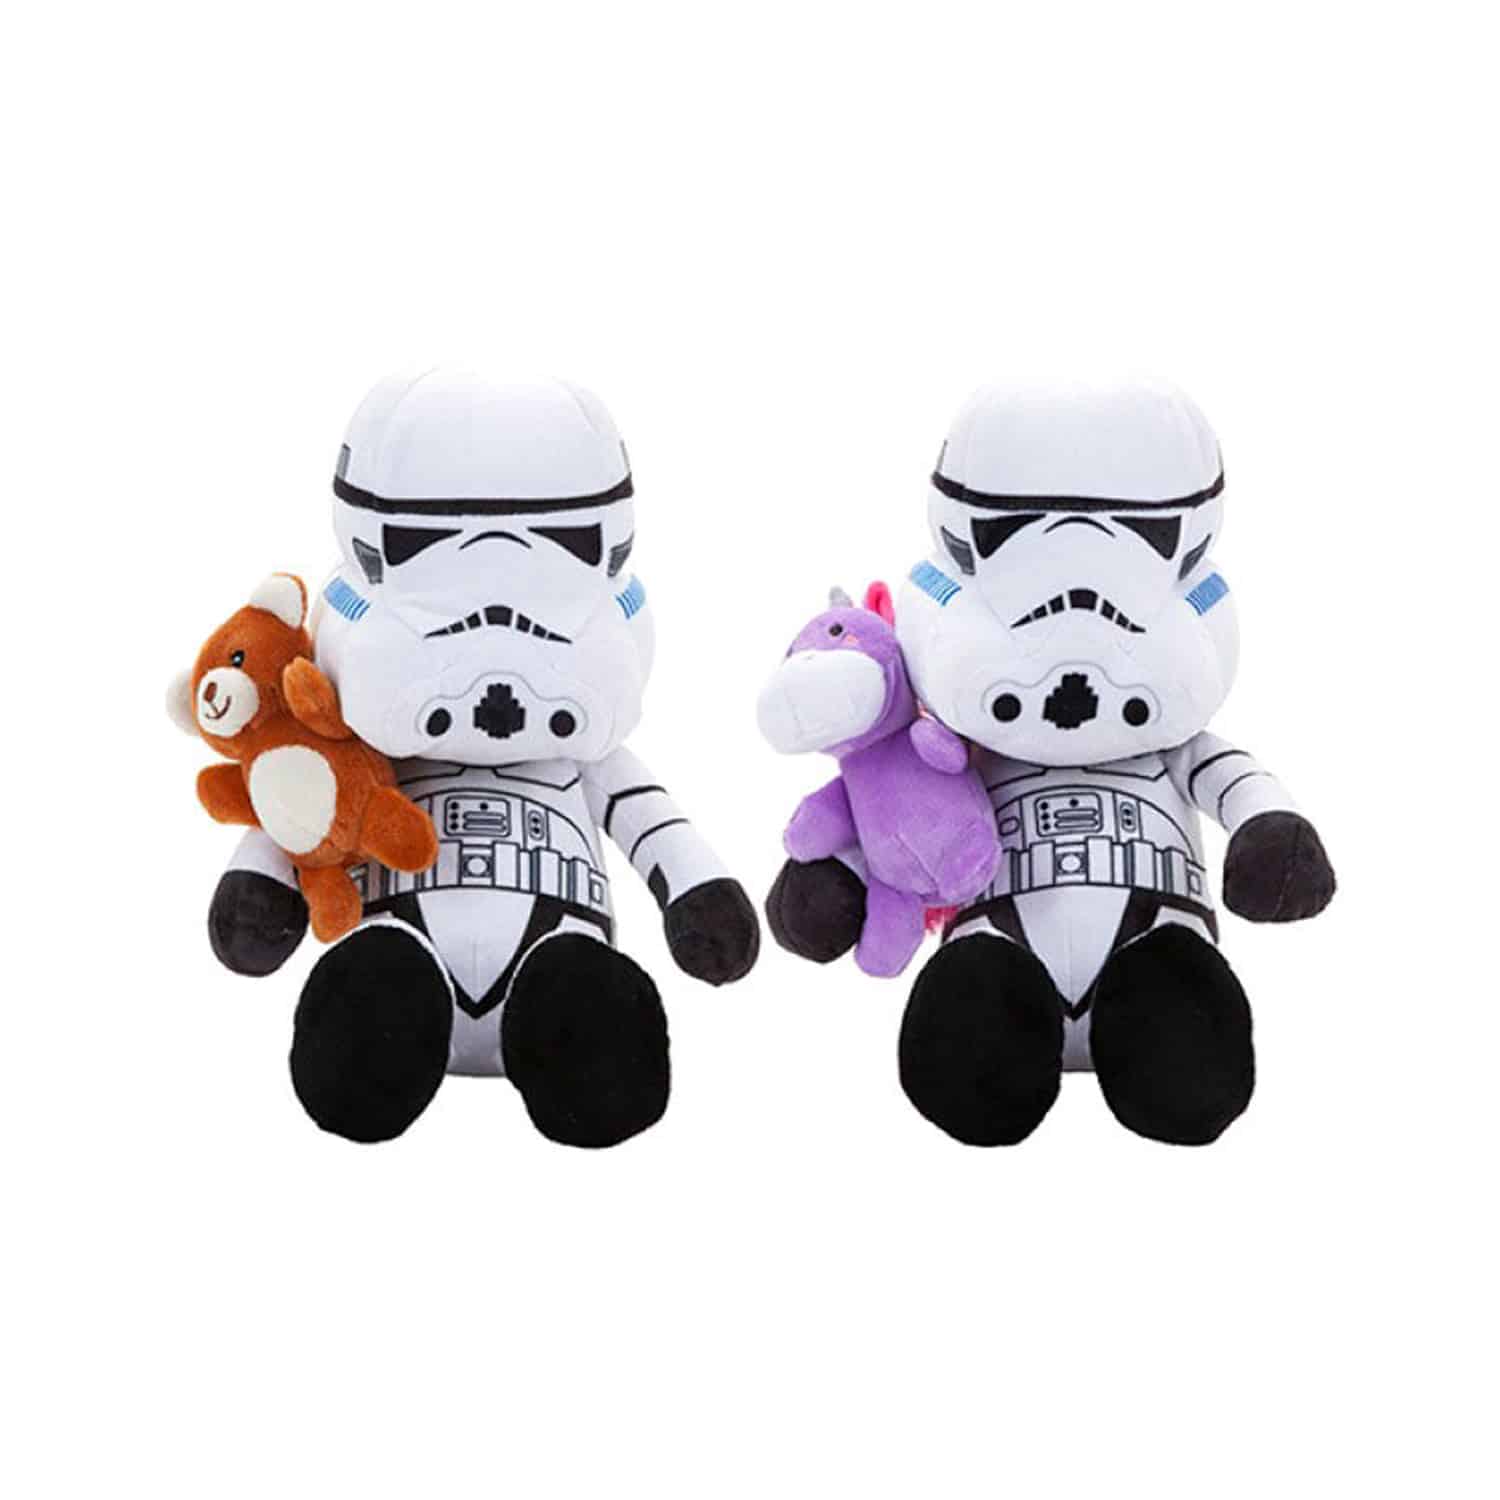 Star Wars - Stormtrooper Teddy Random Plush Toy